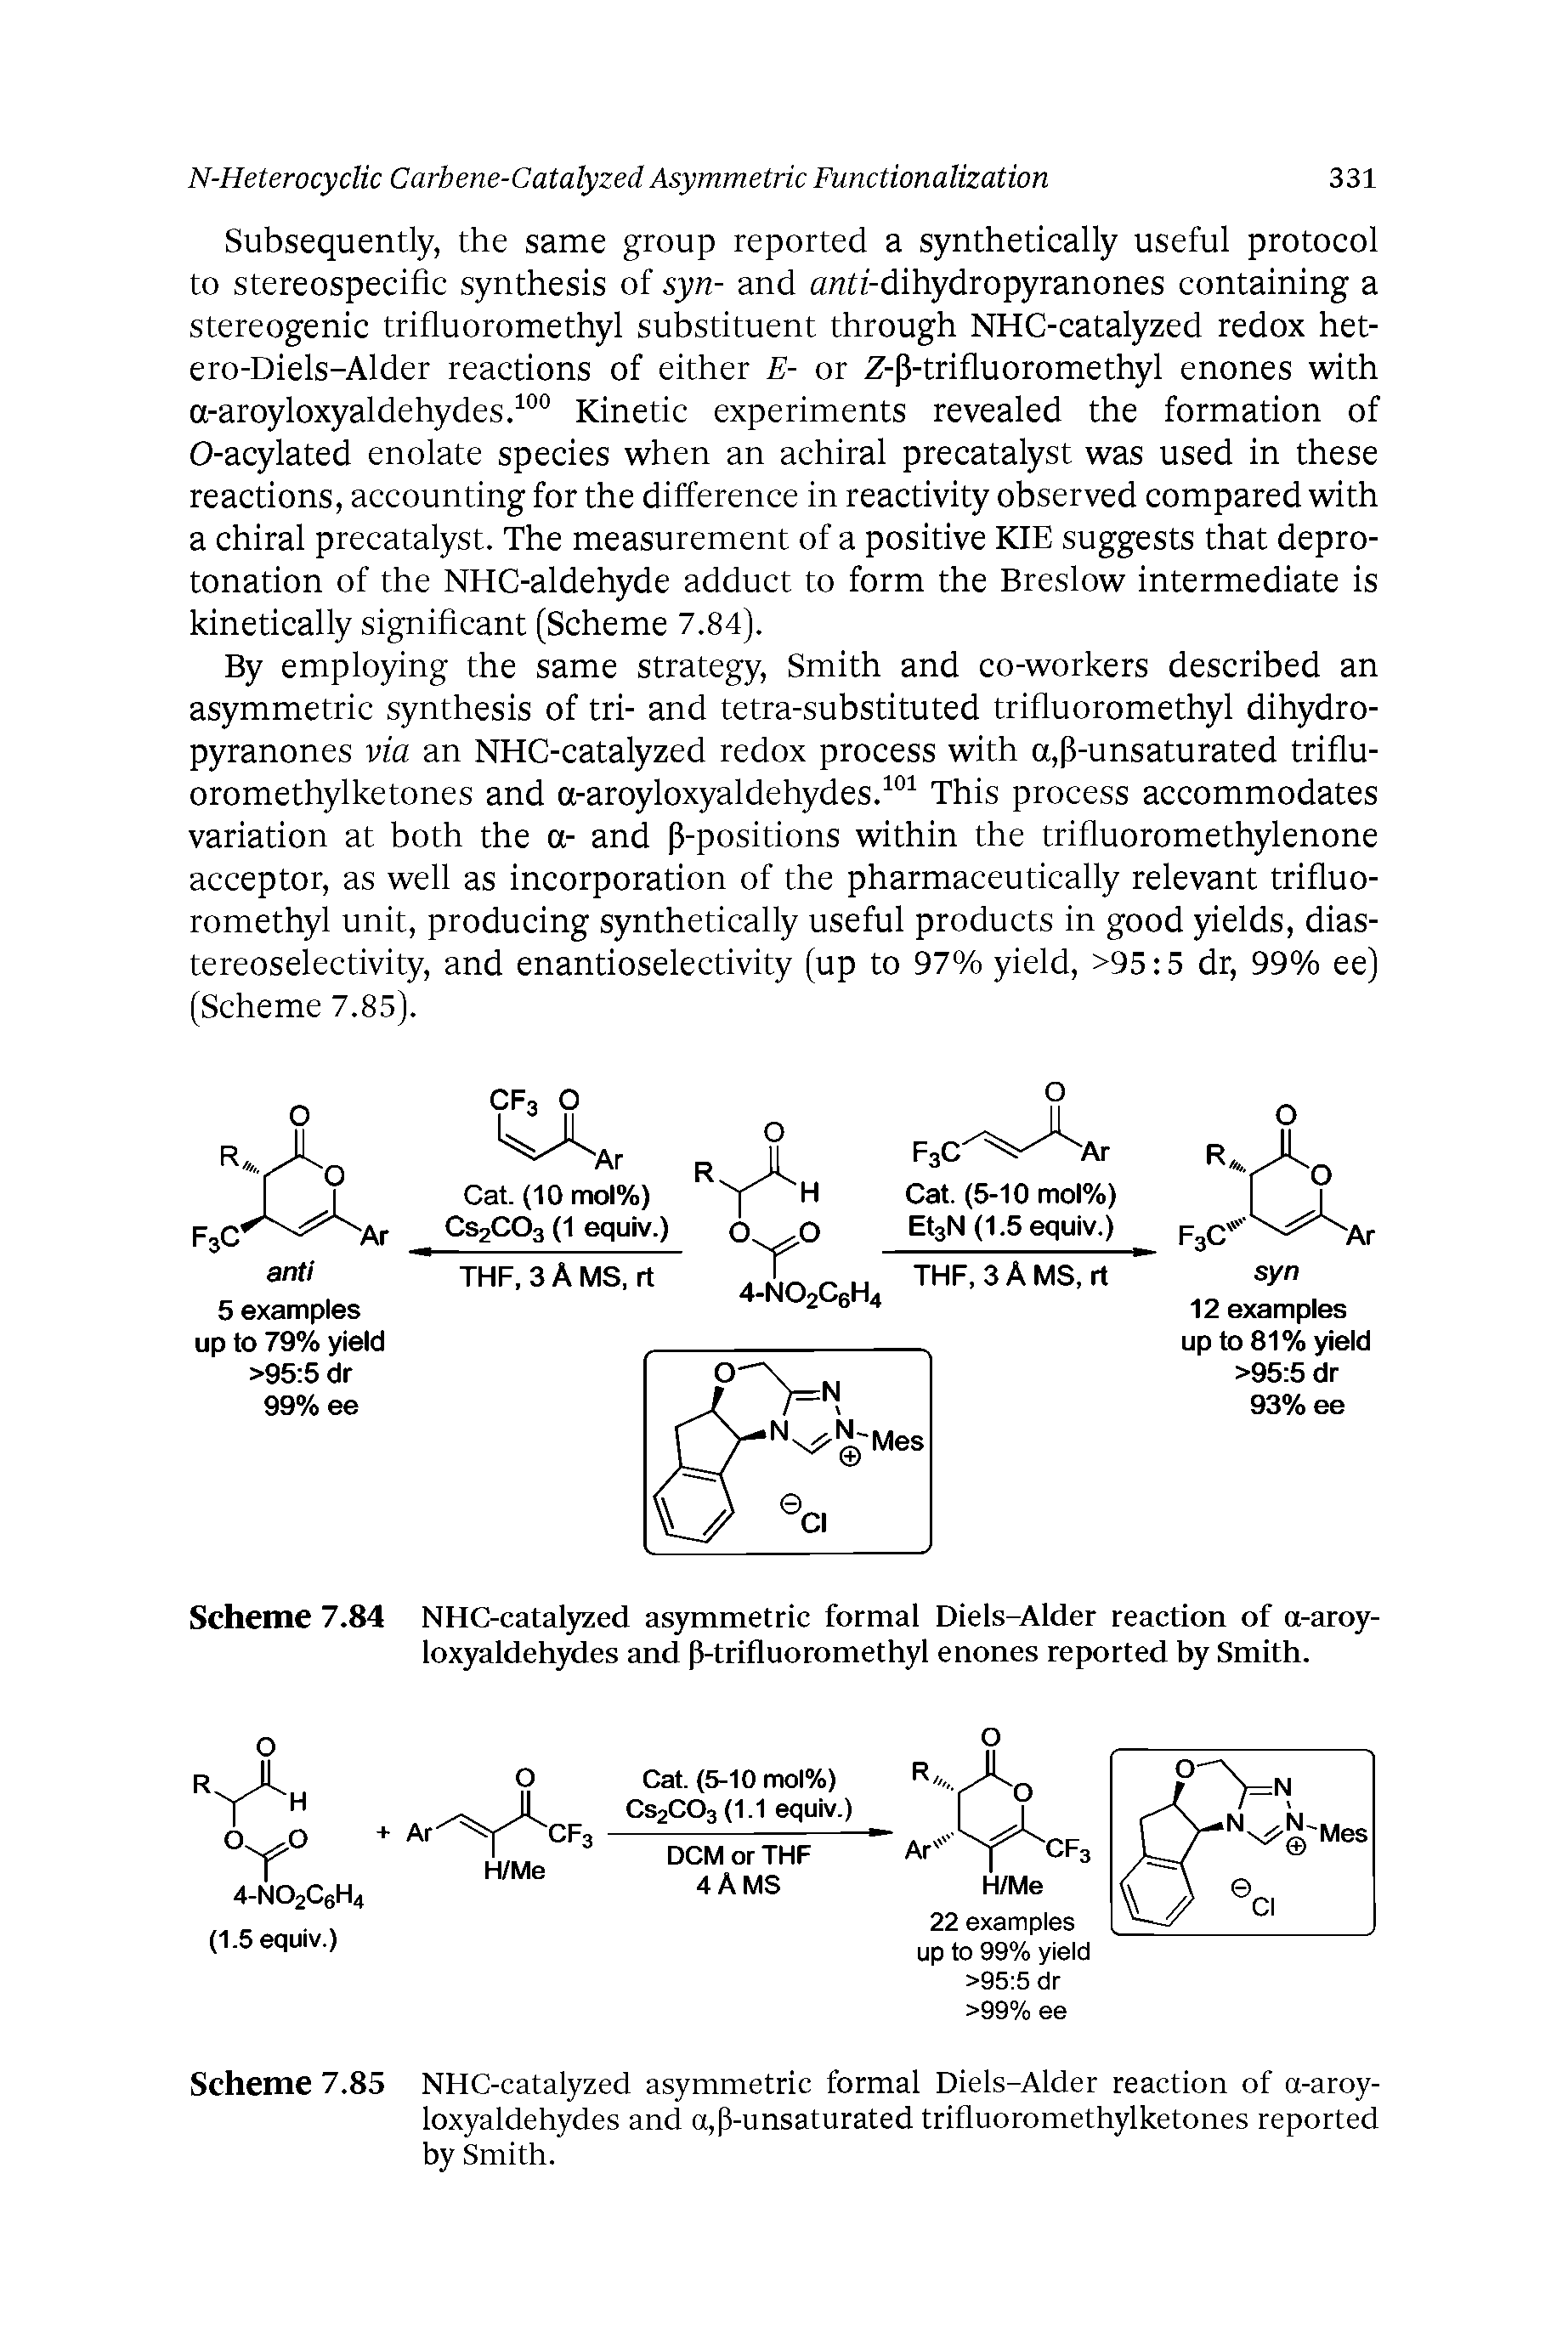 Scheme 7.84 NHC-catalyzed asymmetric formal Diels-Alder reaction of a-aroy-loxyaldehydes and p-trifluoromethyl enones reported by Smith.